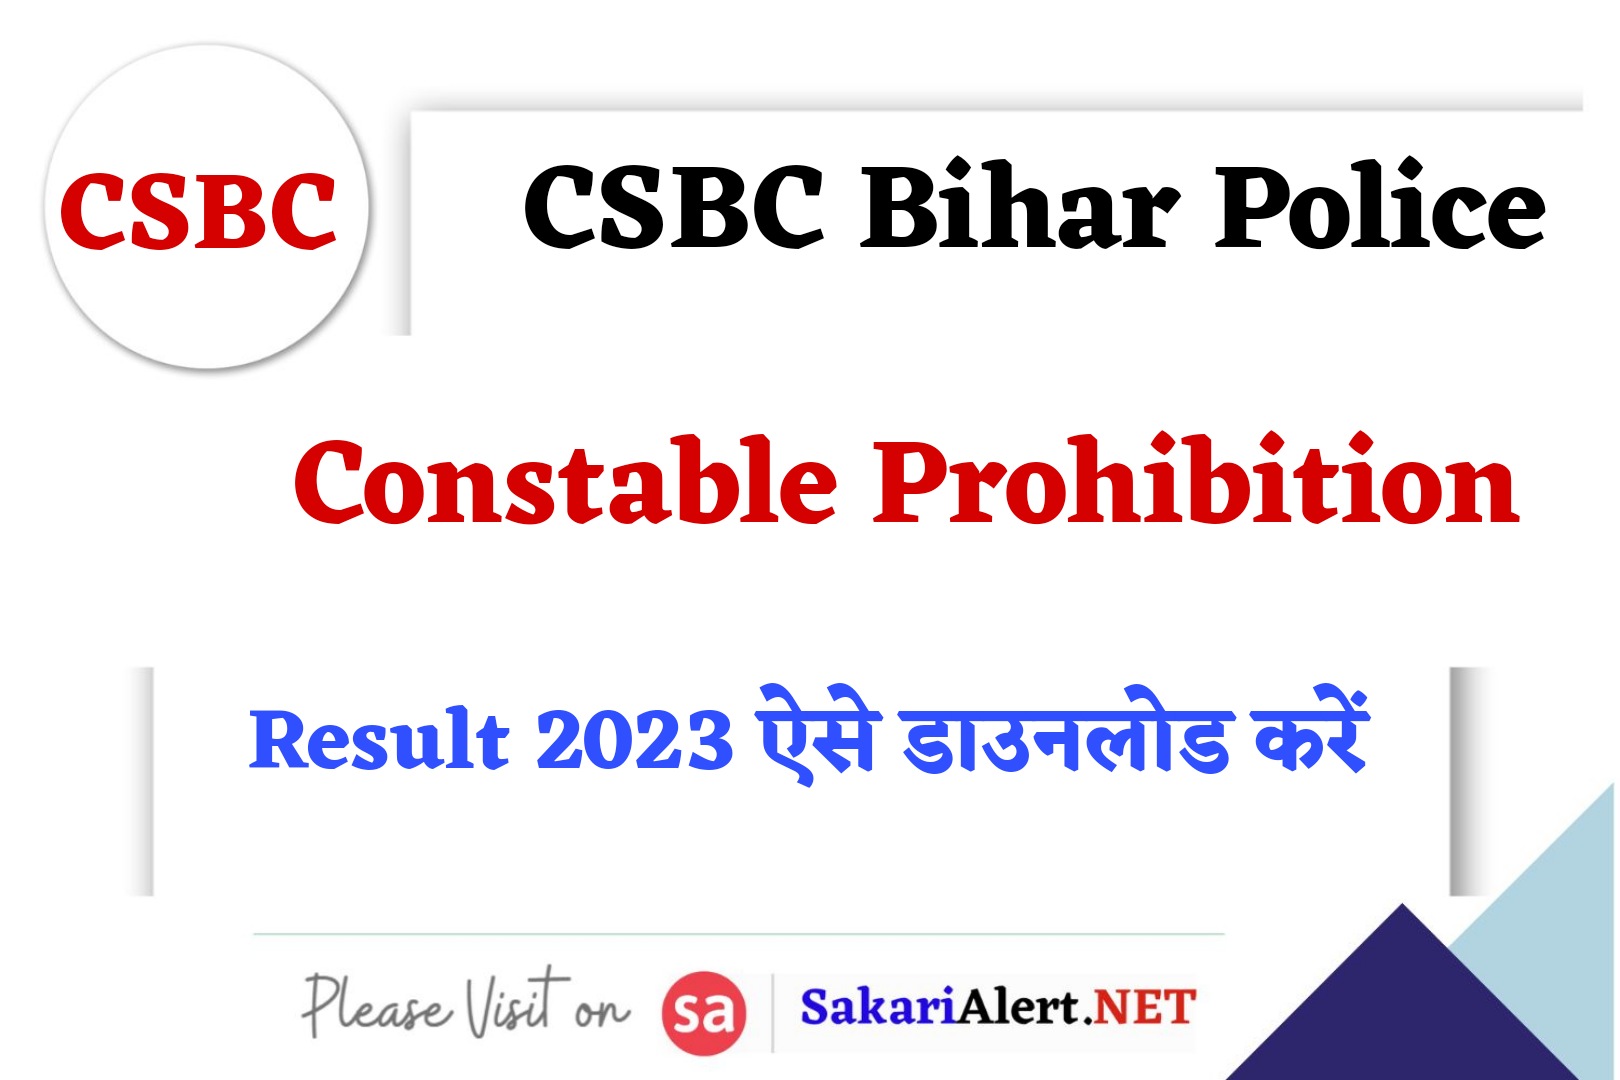 CSBC Bihar Police Constable Prohibition Result 2023